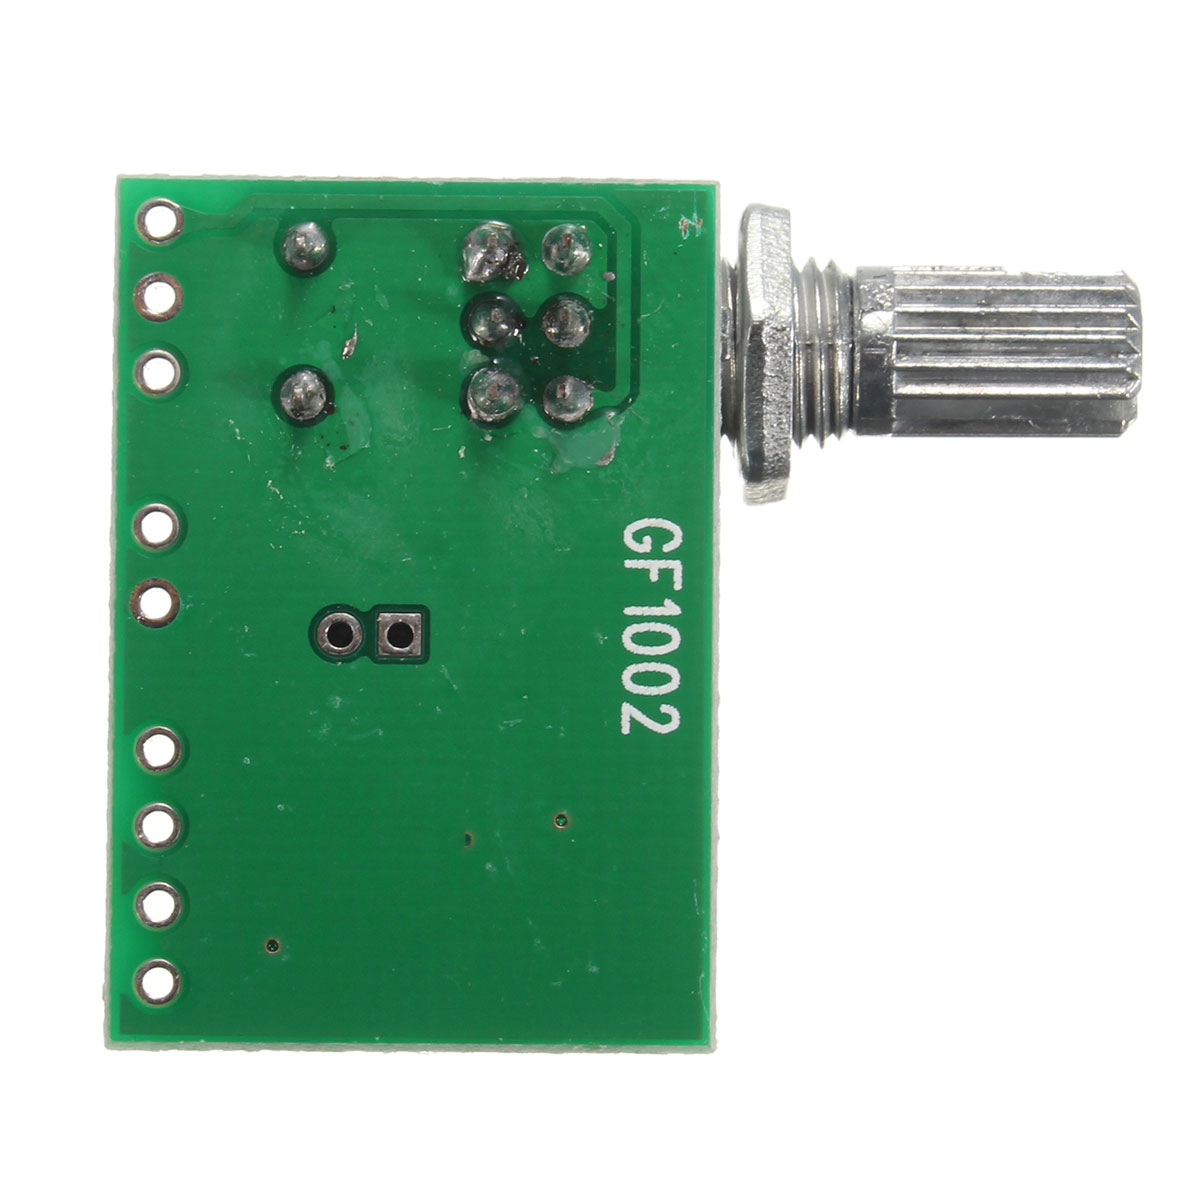 5pcs-PAM8403-2-Channel-USB-Power-Audio-Amplifier-Module-Board-3Wx2-Volume-Control-1328600